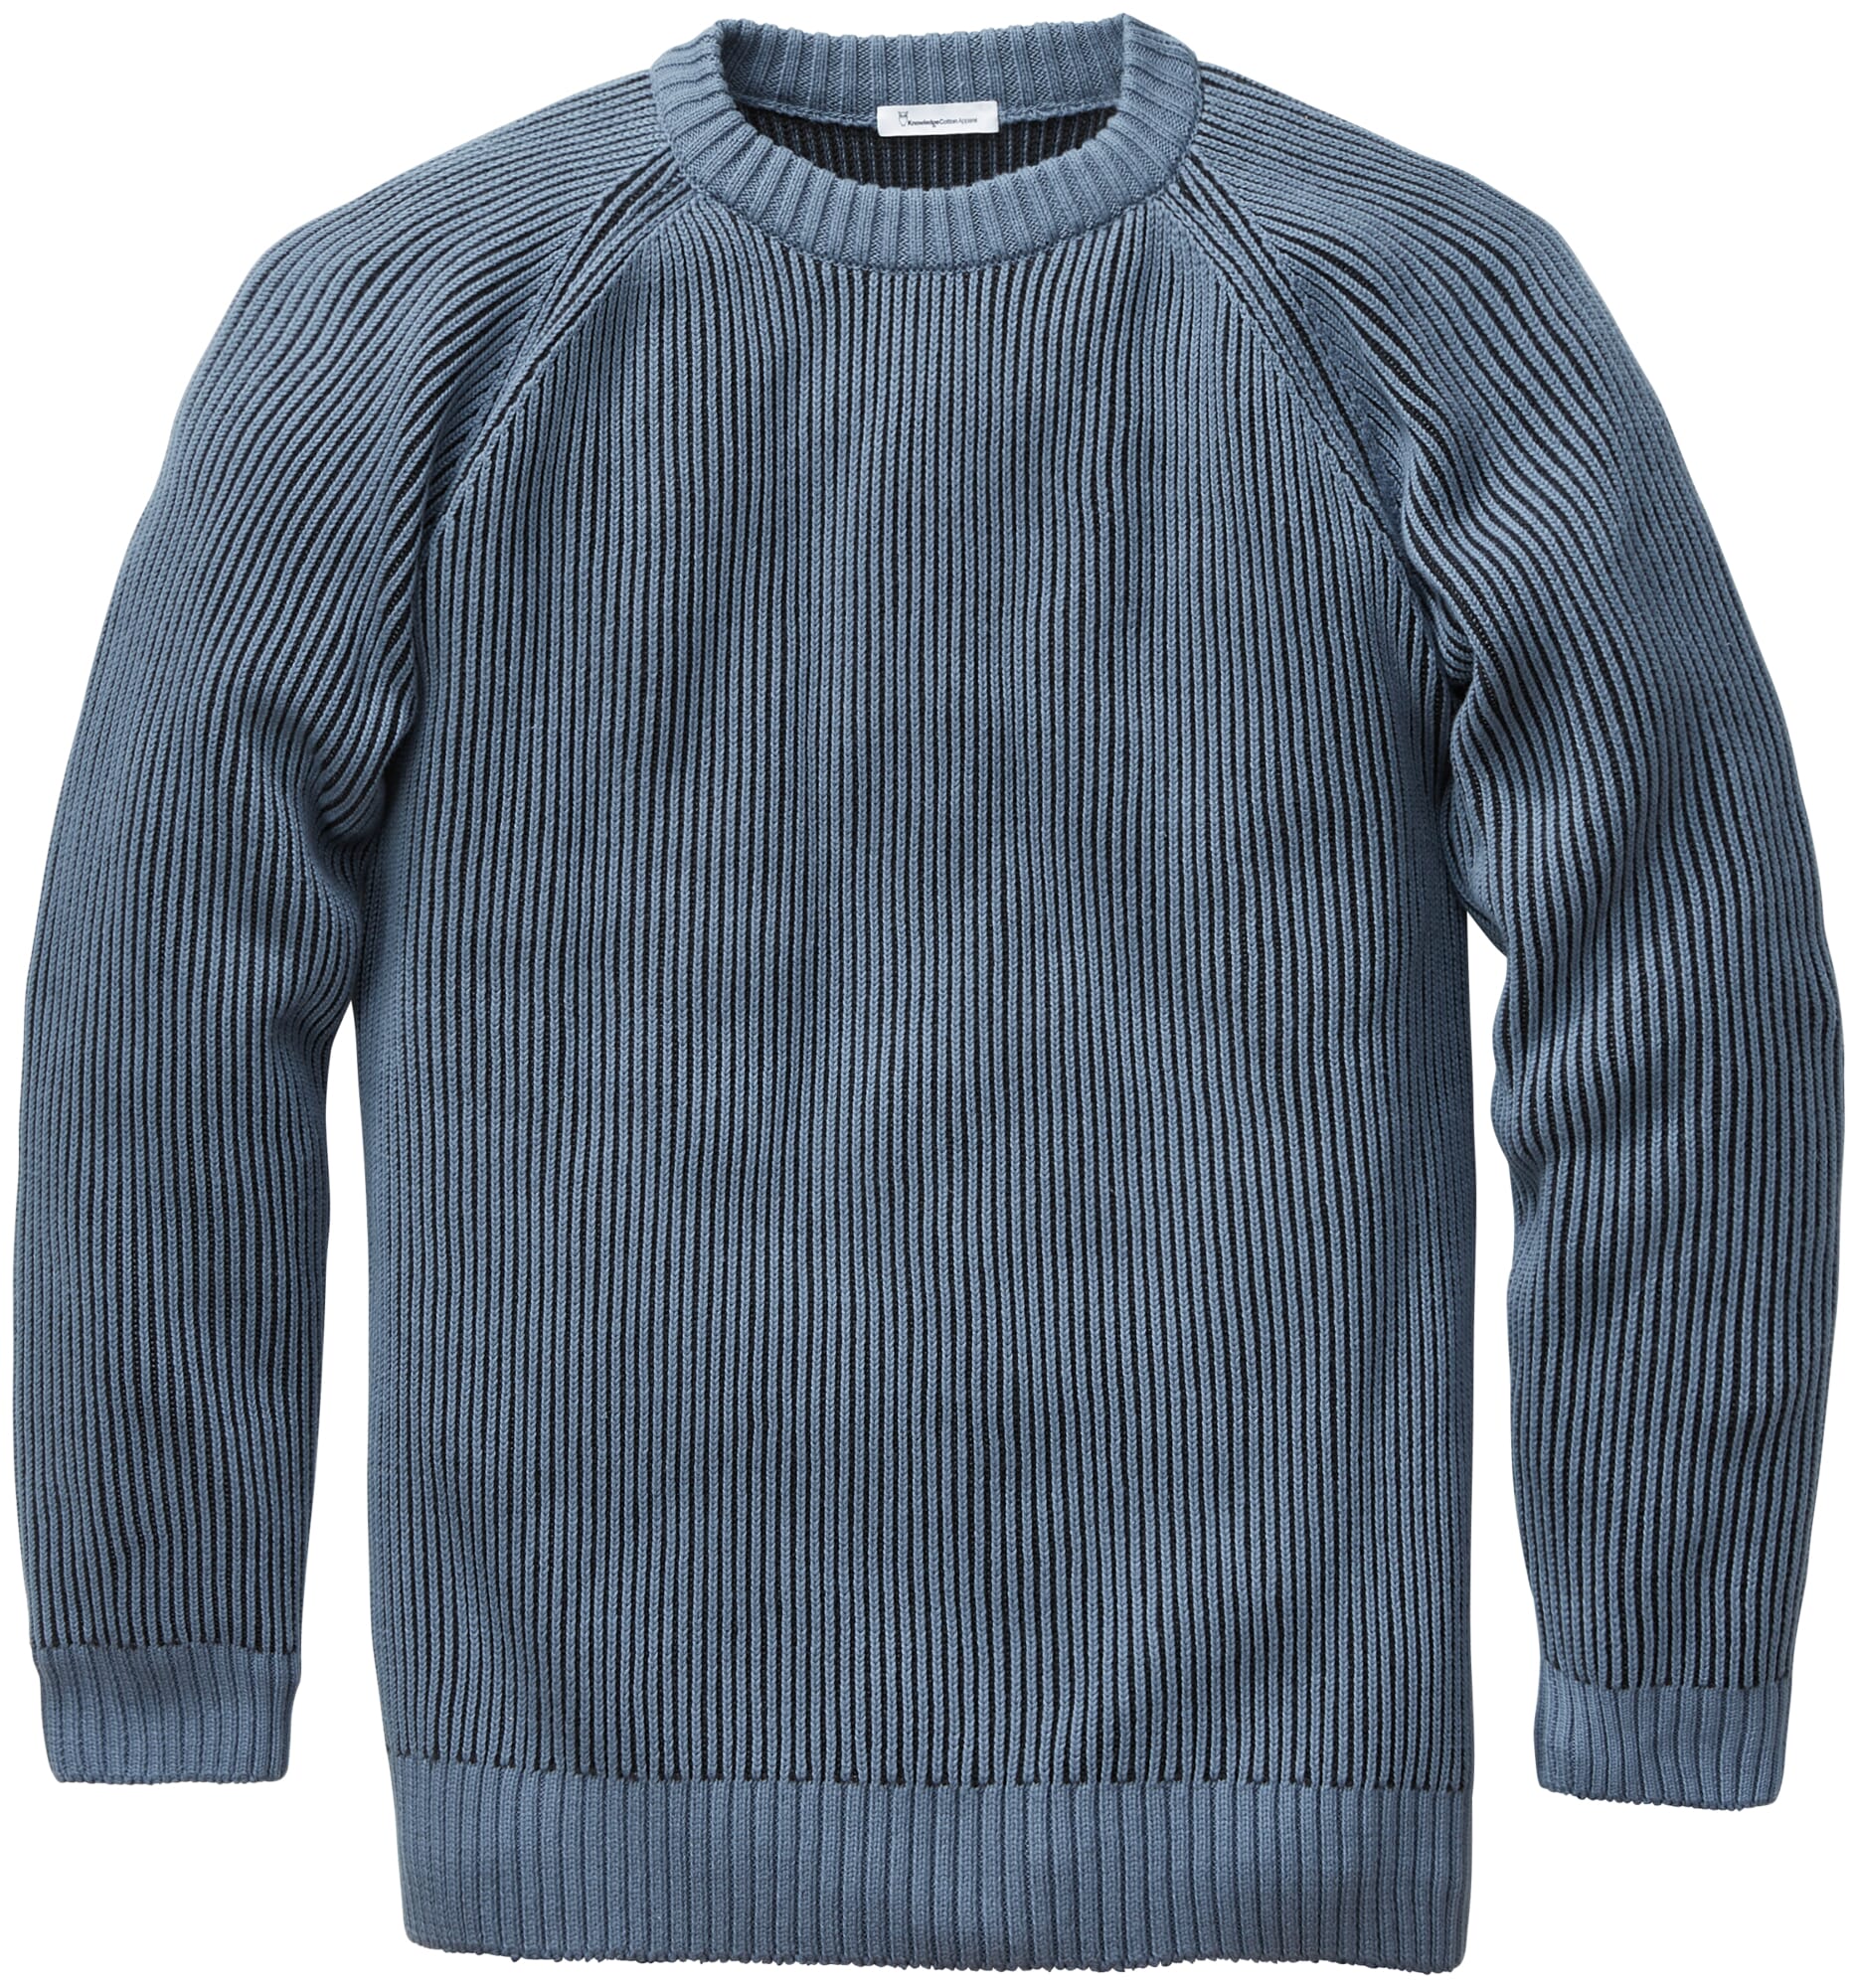 Mens Rib Knit Sweater, Blue tones | Manufactum